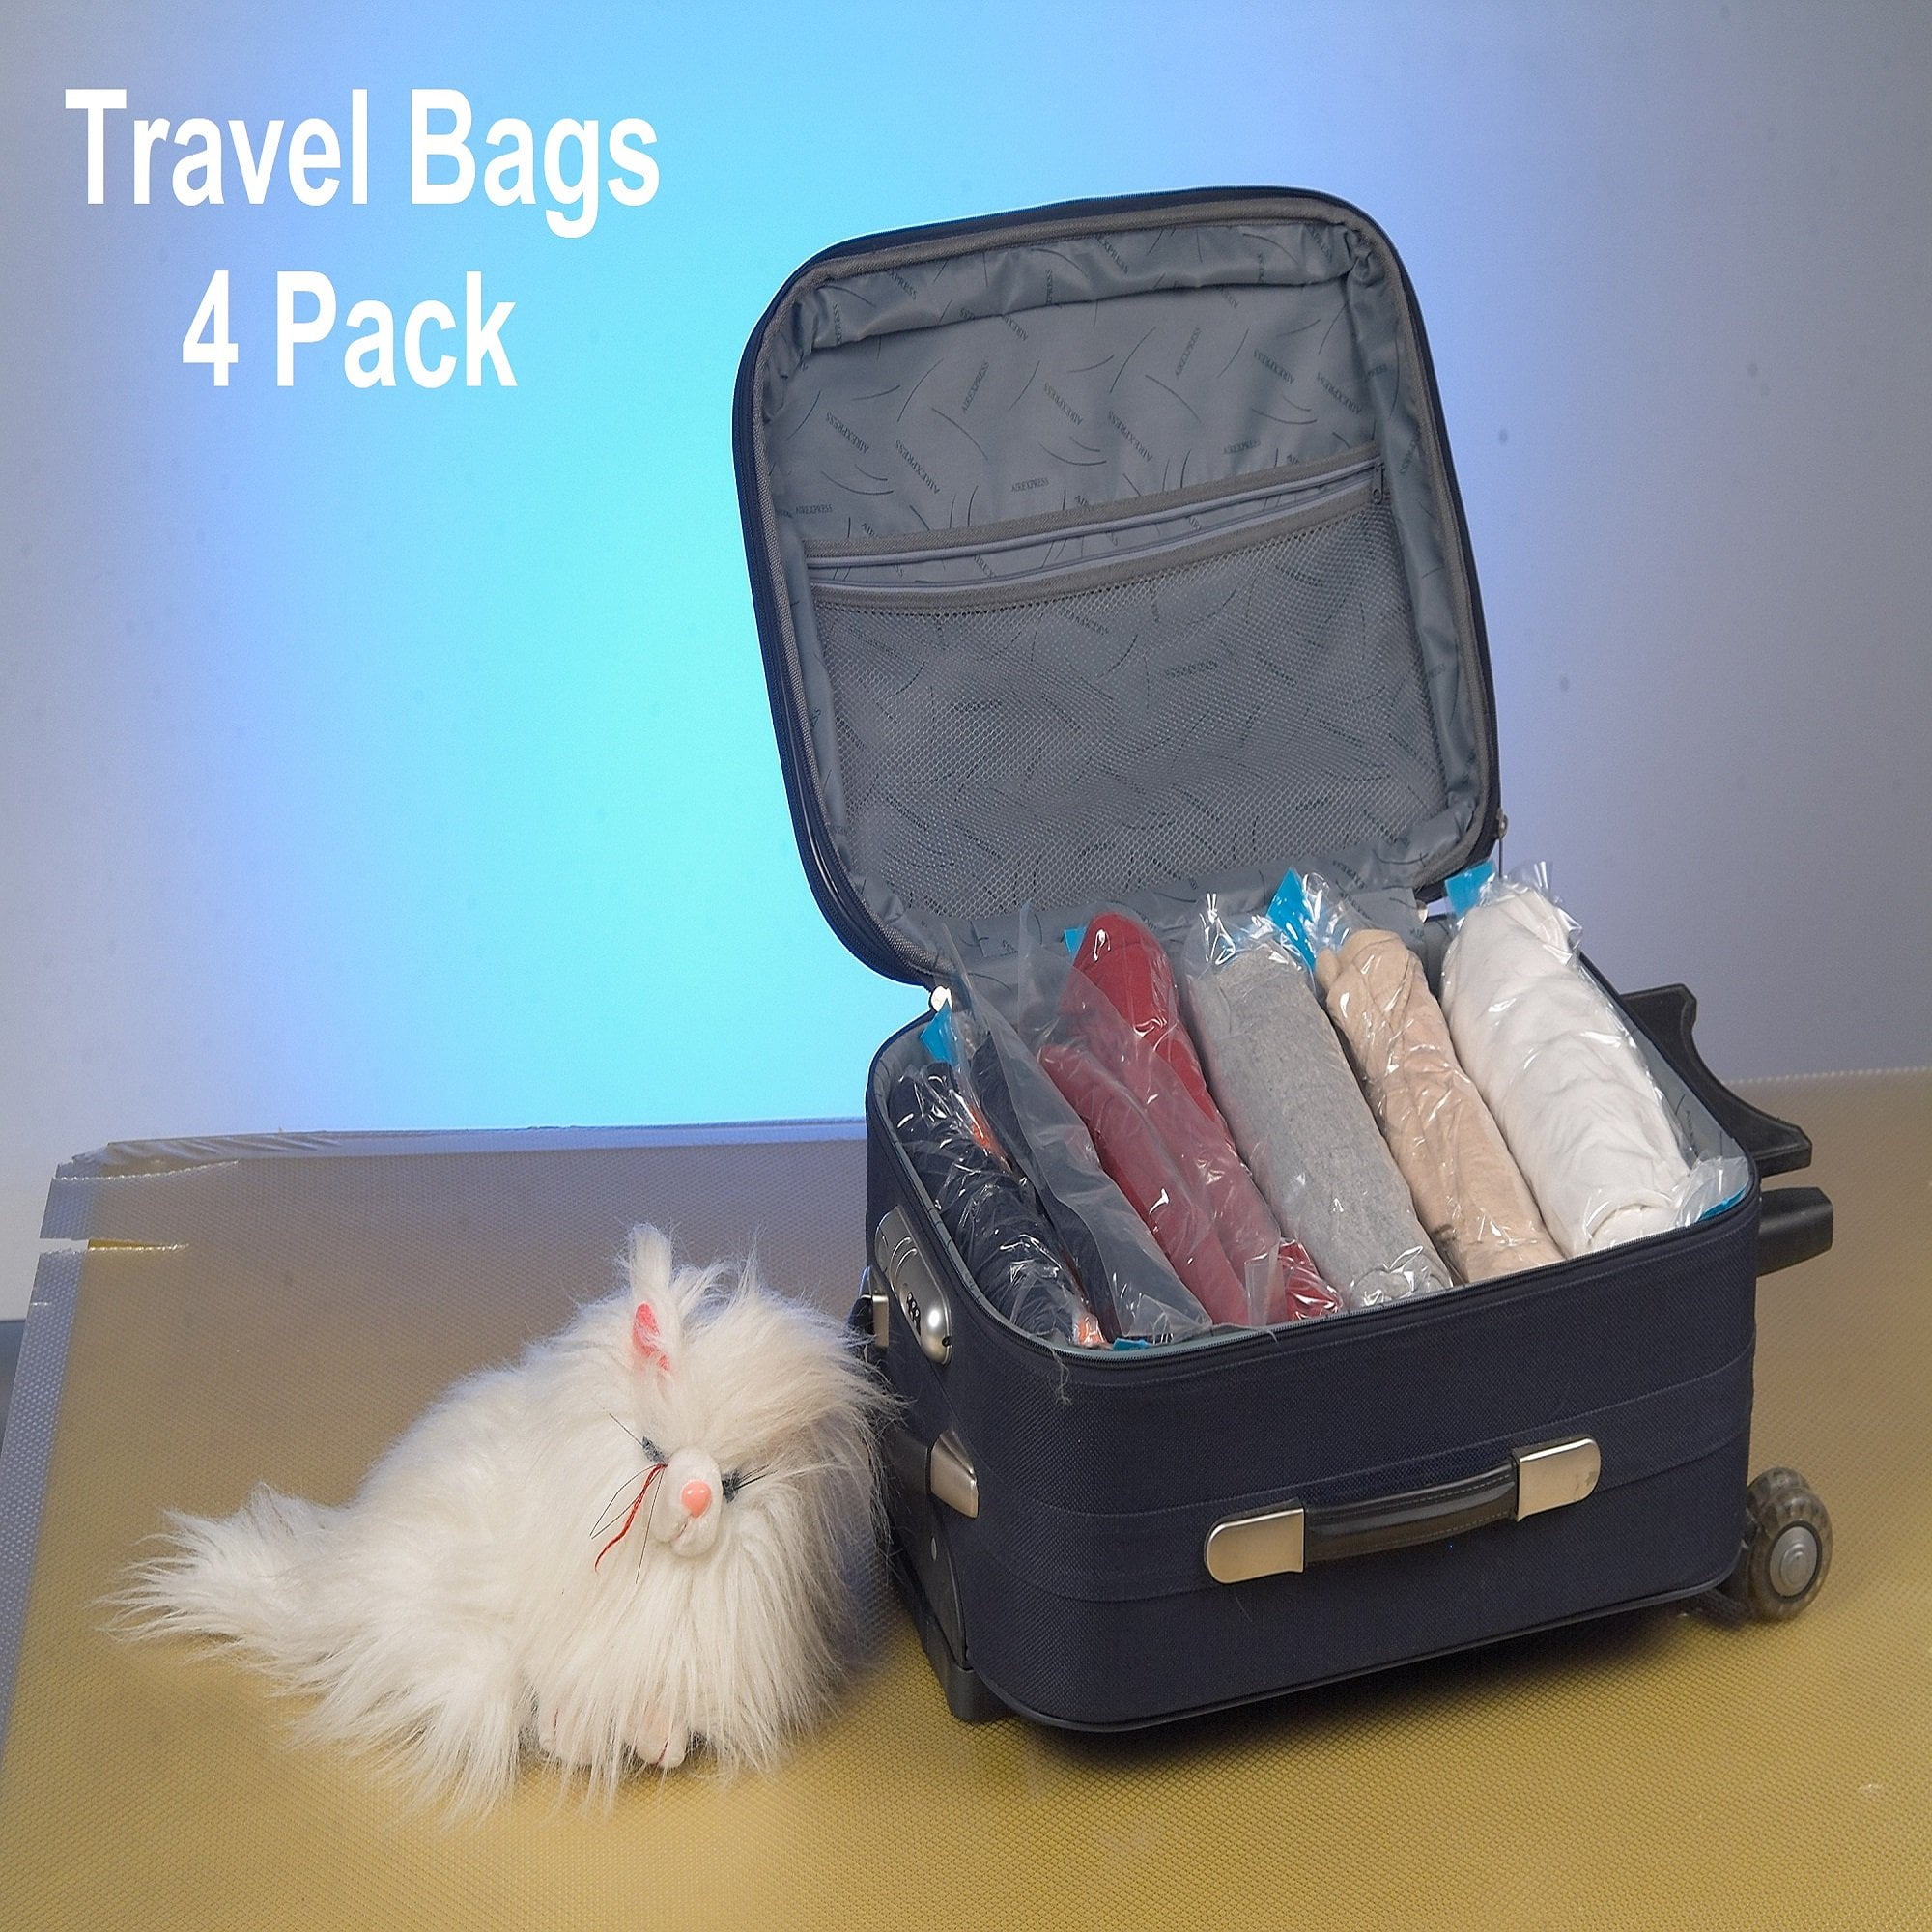 10 PACK COMBO: 6 Jumbo Extra Large 47x32 Vacuum Seal Space Saver Strong Storage  Bag + 4 Travel Compress Bag 